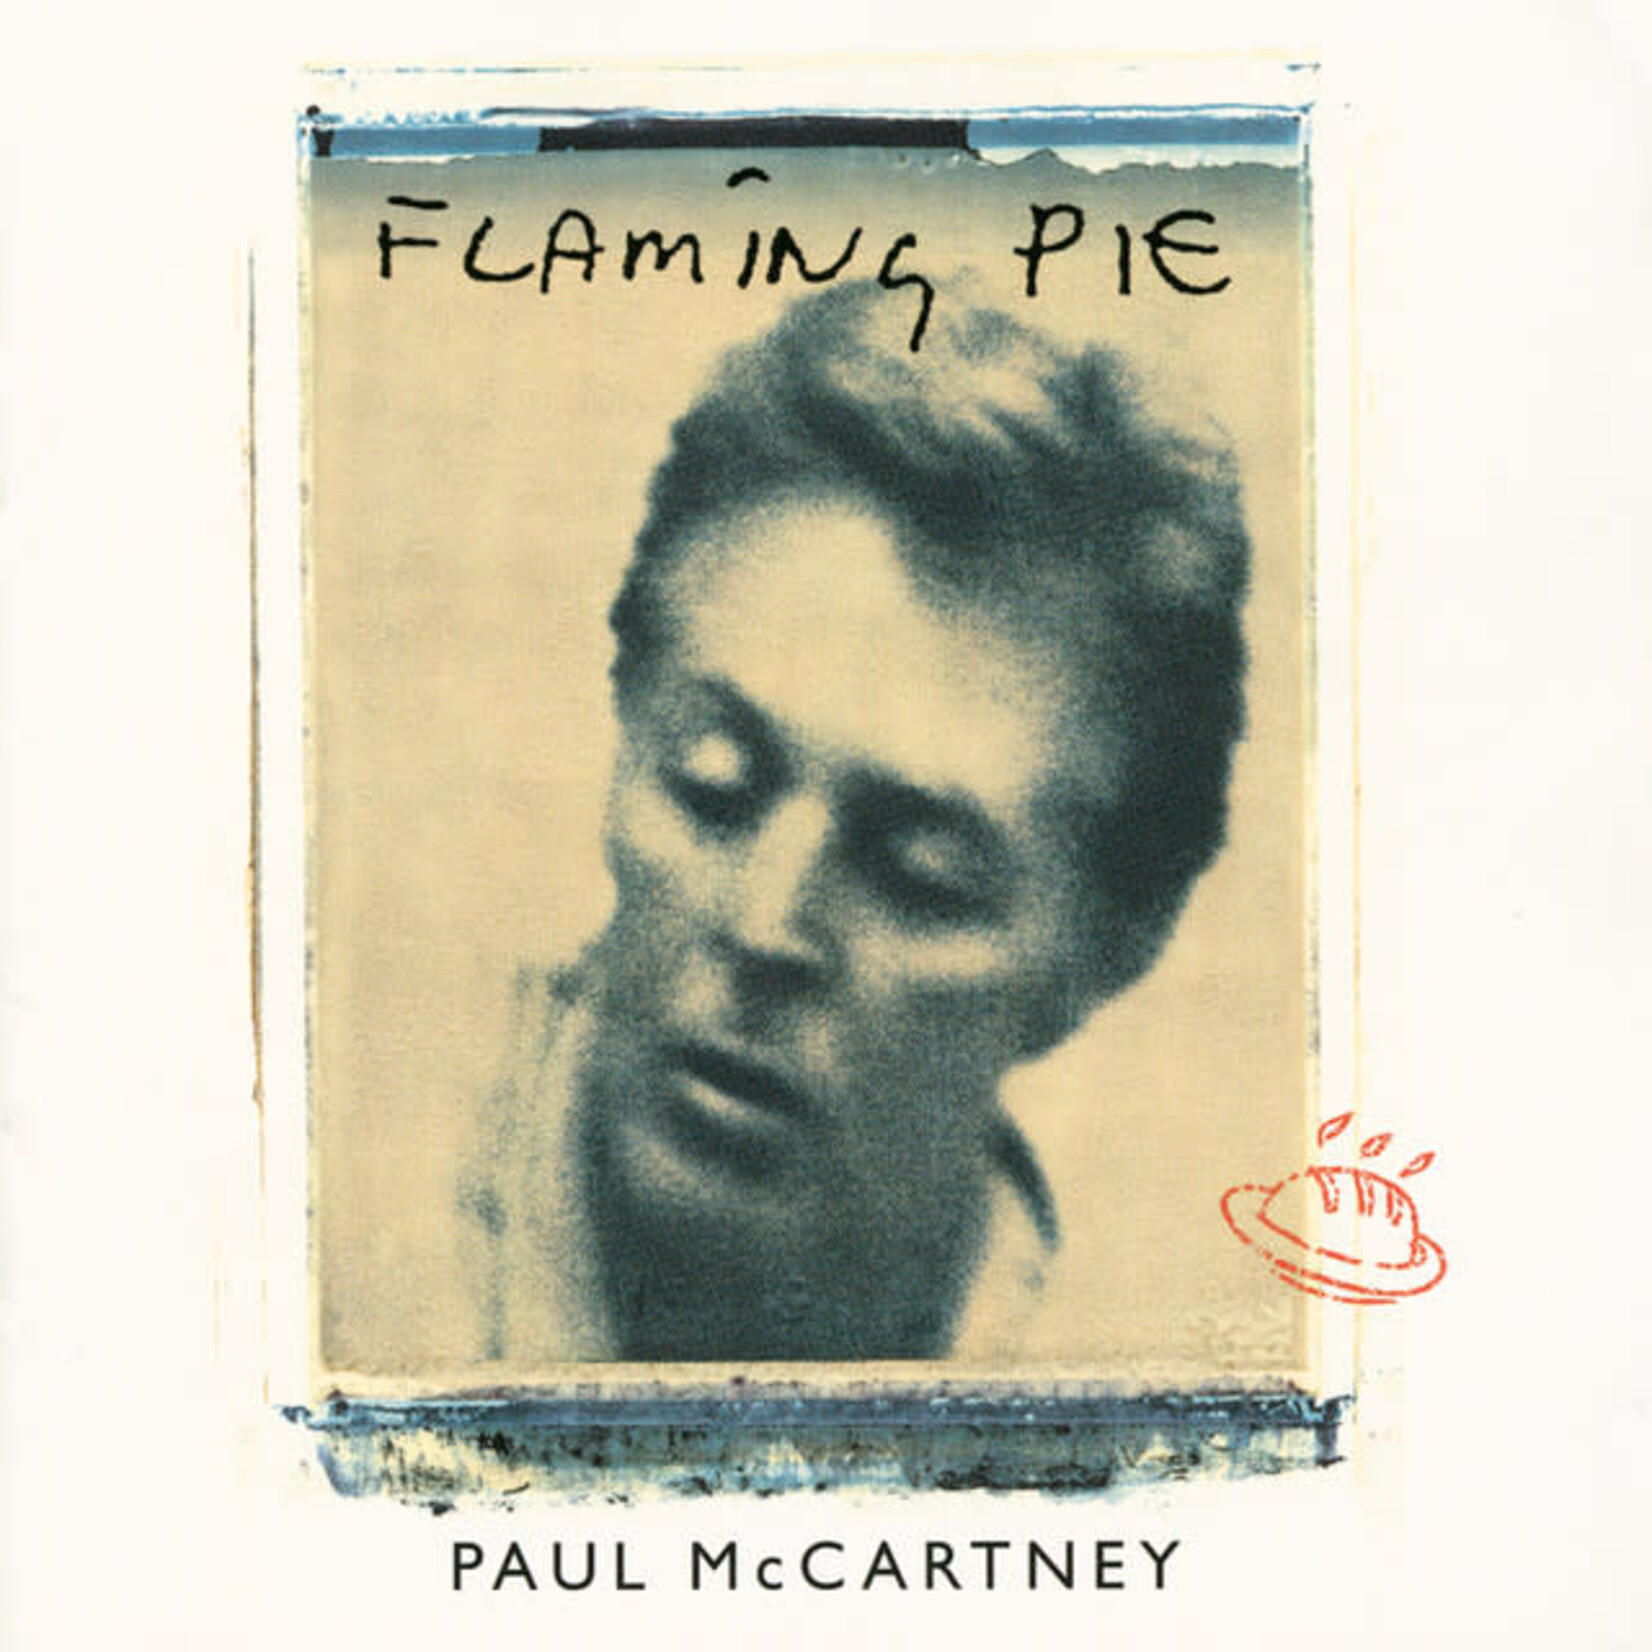 Paul McCartney - Flaming Pie [USED CD]